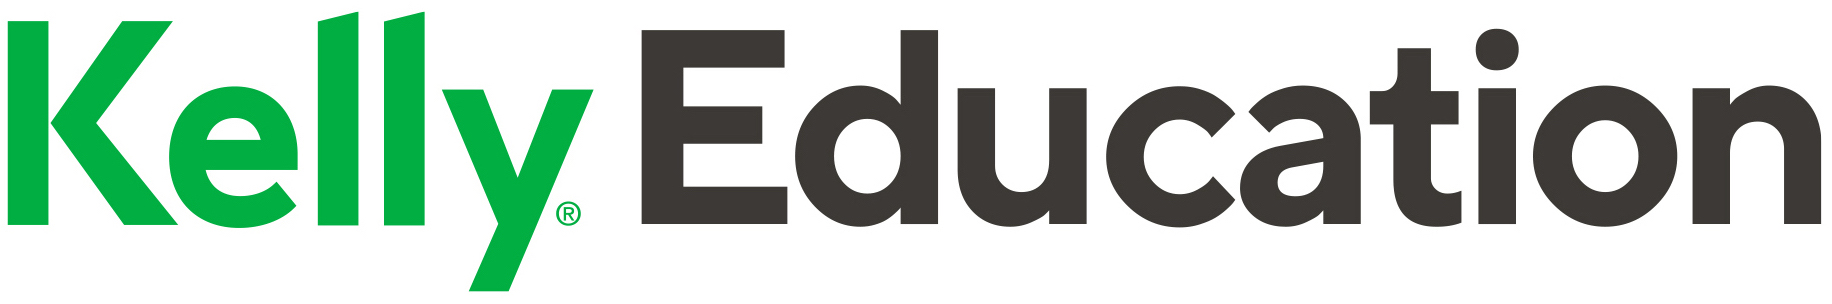 Kelly Education_logo cropped.jpg